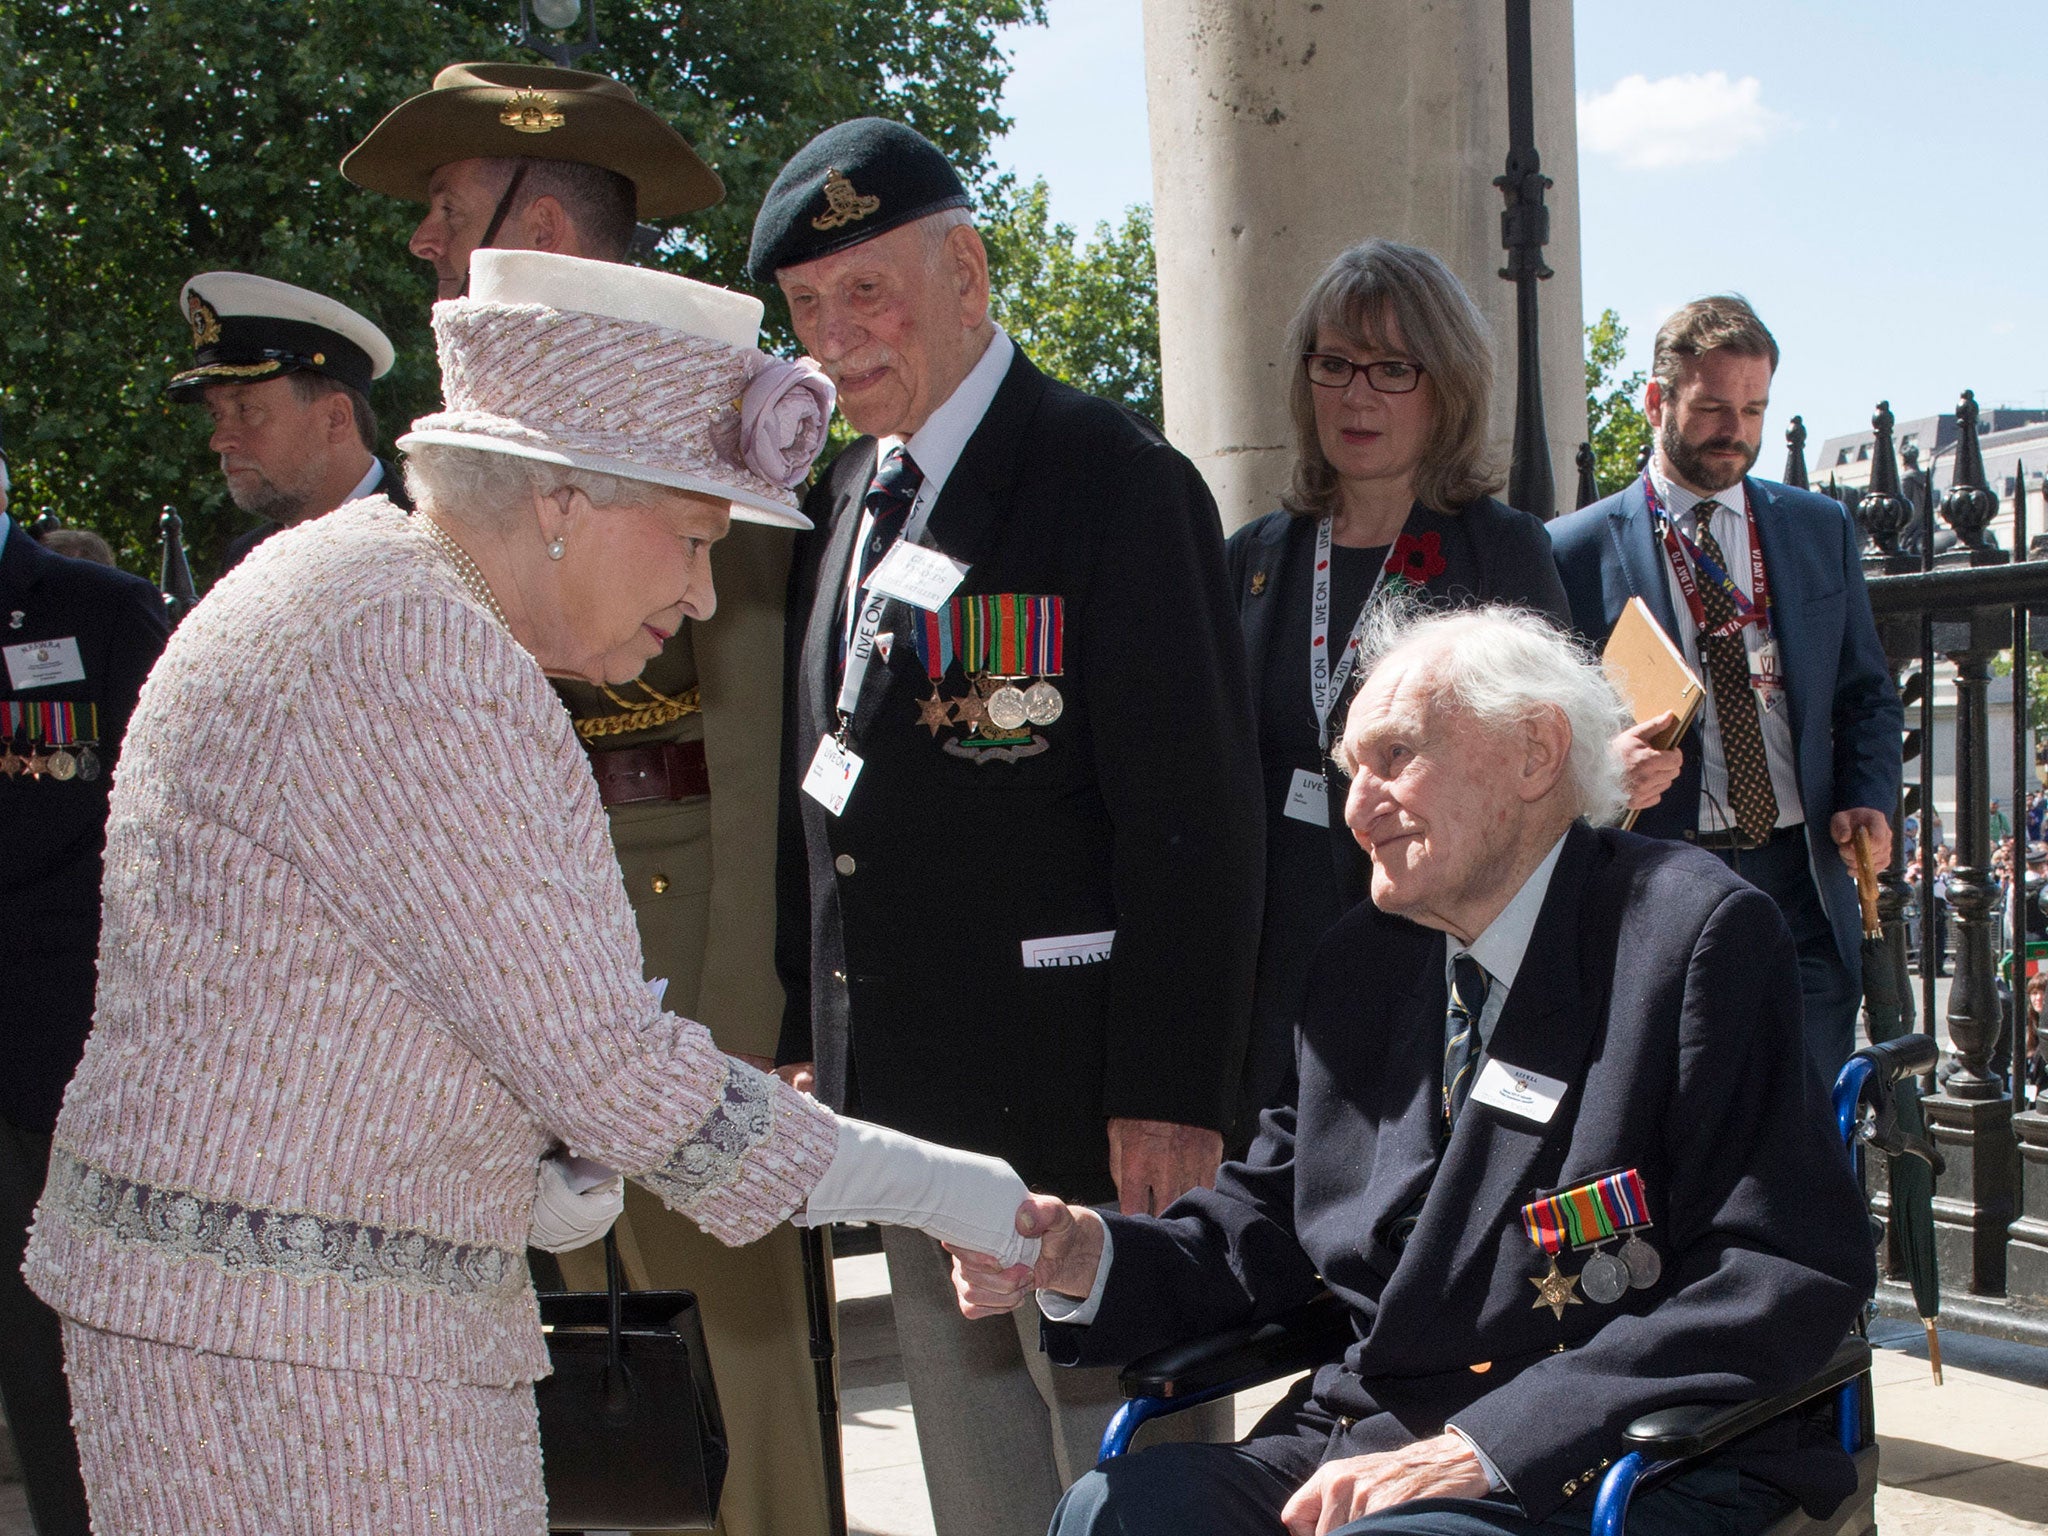 The Queen meets veteran John Dean